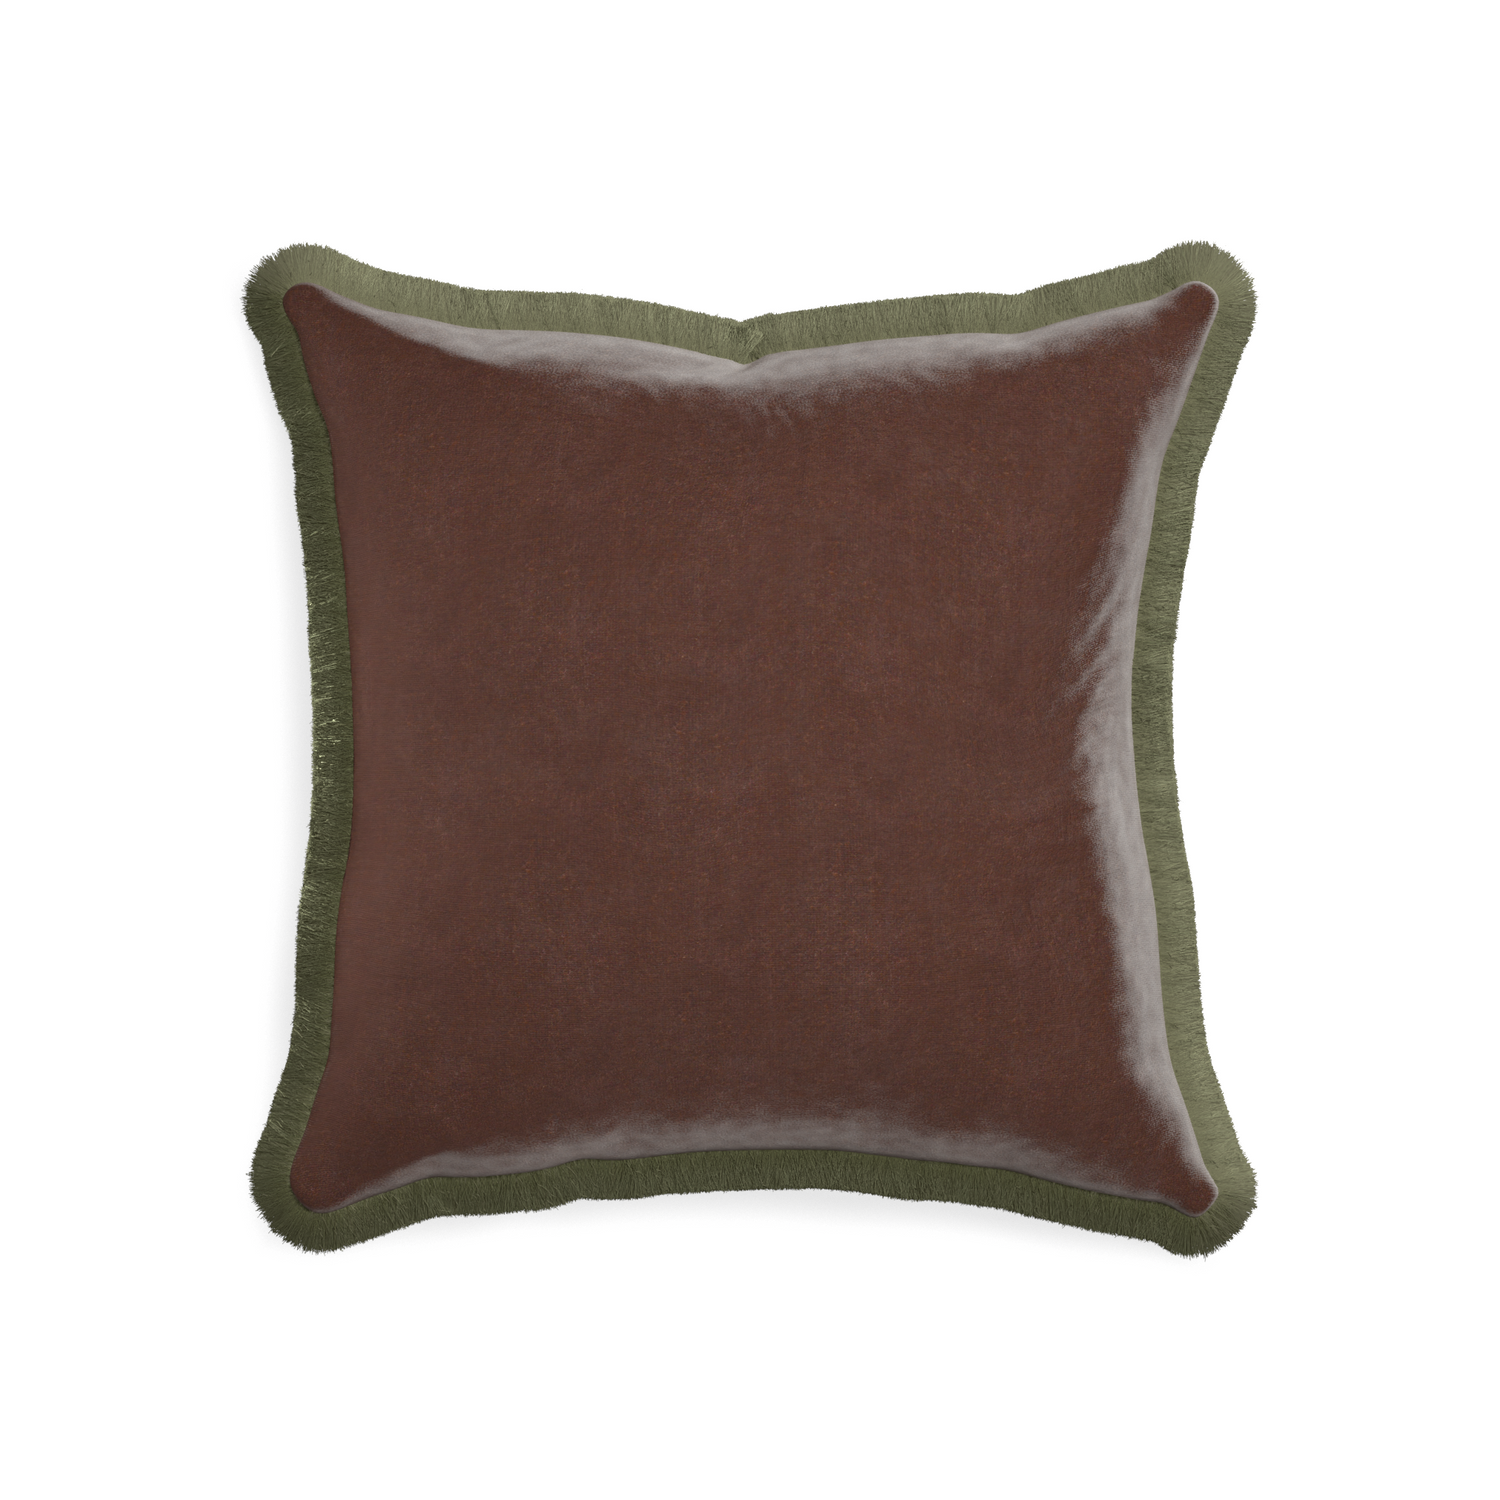 square brown velvet pillow with sage green fringe